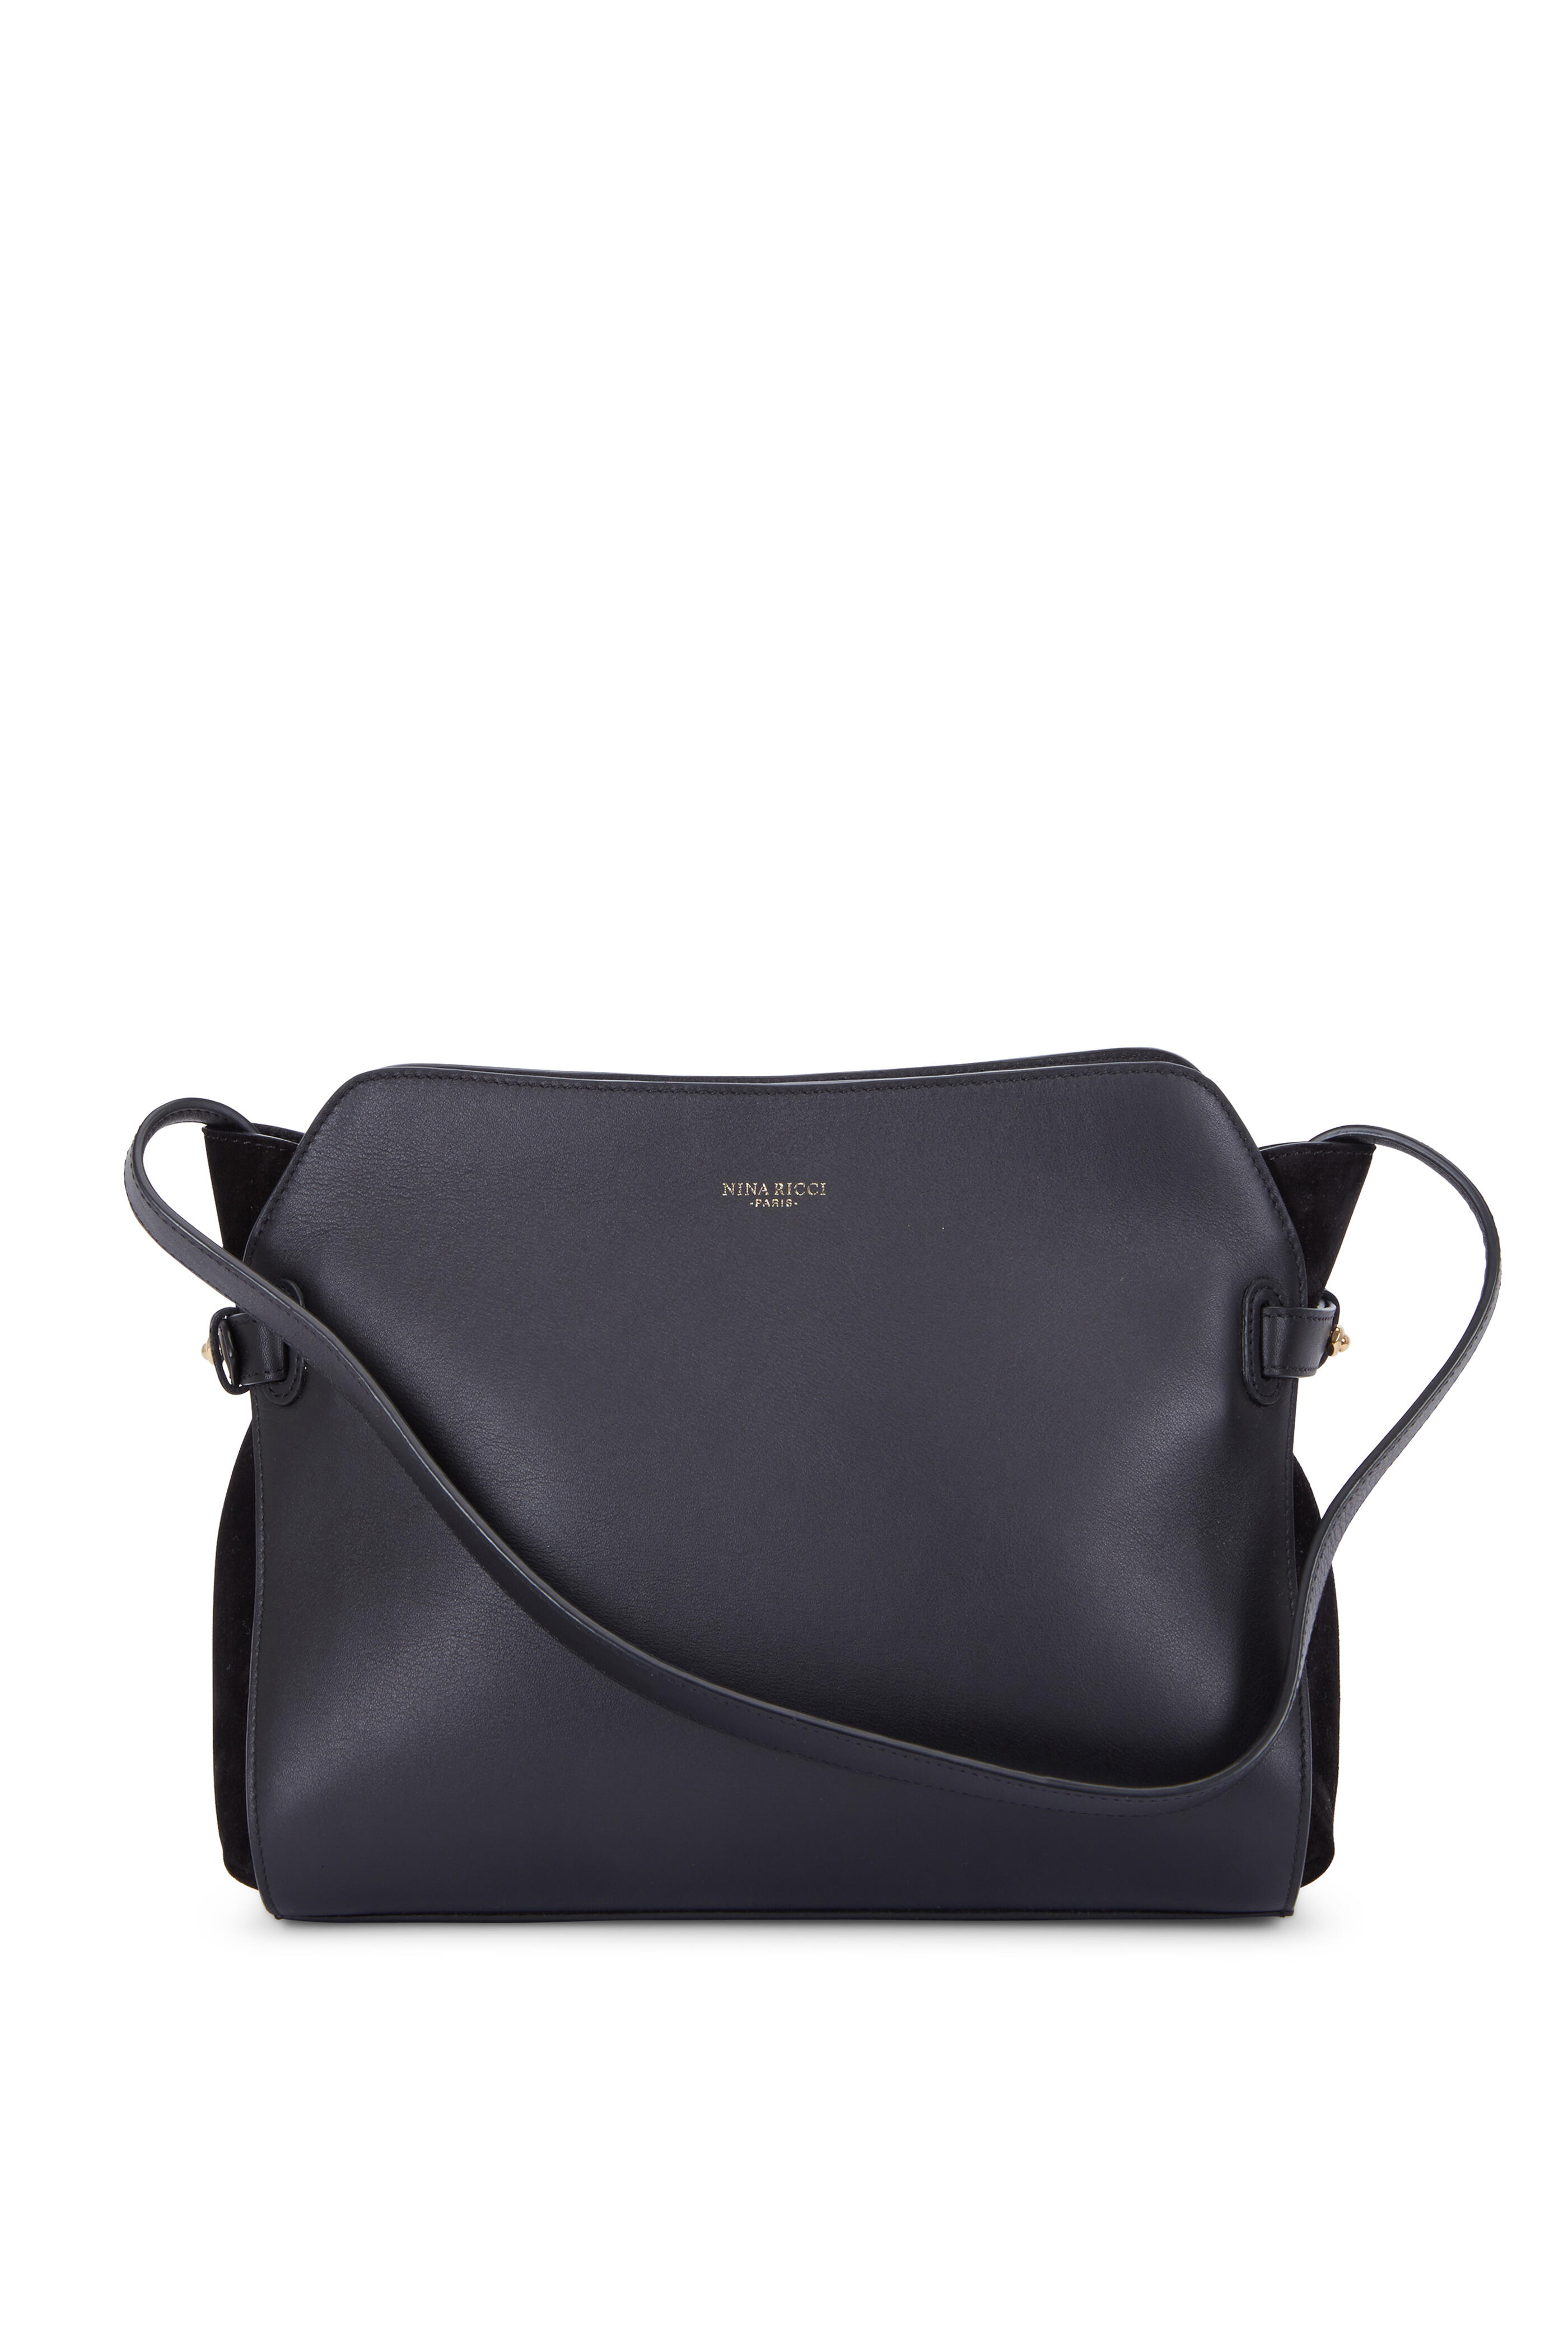 Nina Ricci - Marché Black Leather & Suede Small Shoulder Bag